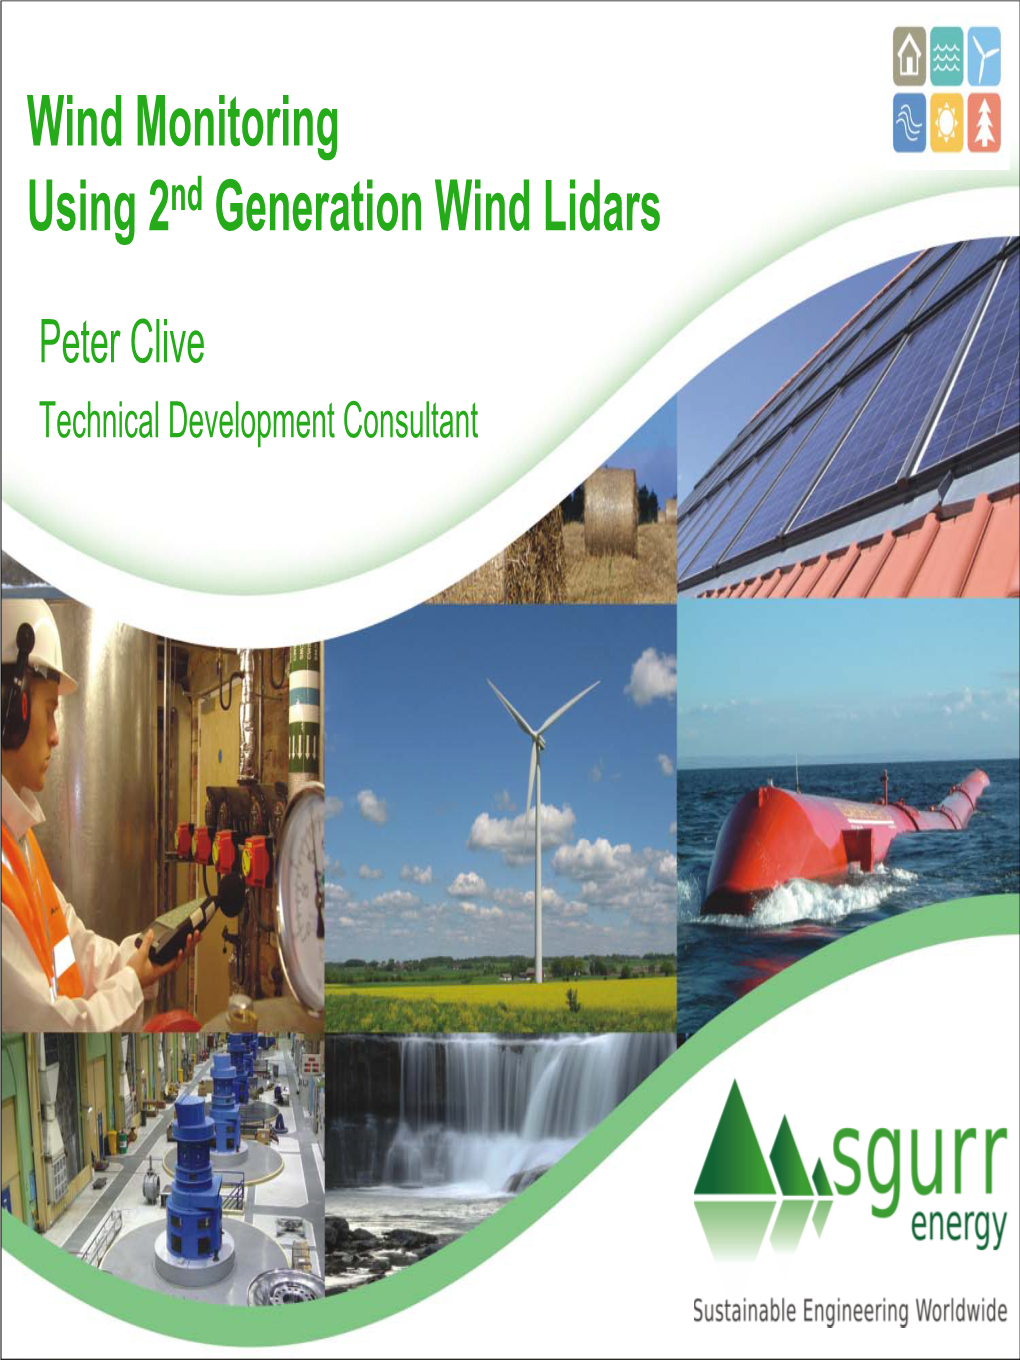 2Nd Generation Wind Lidars